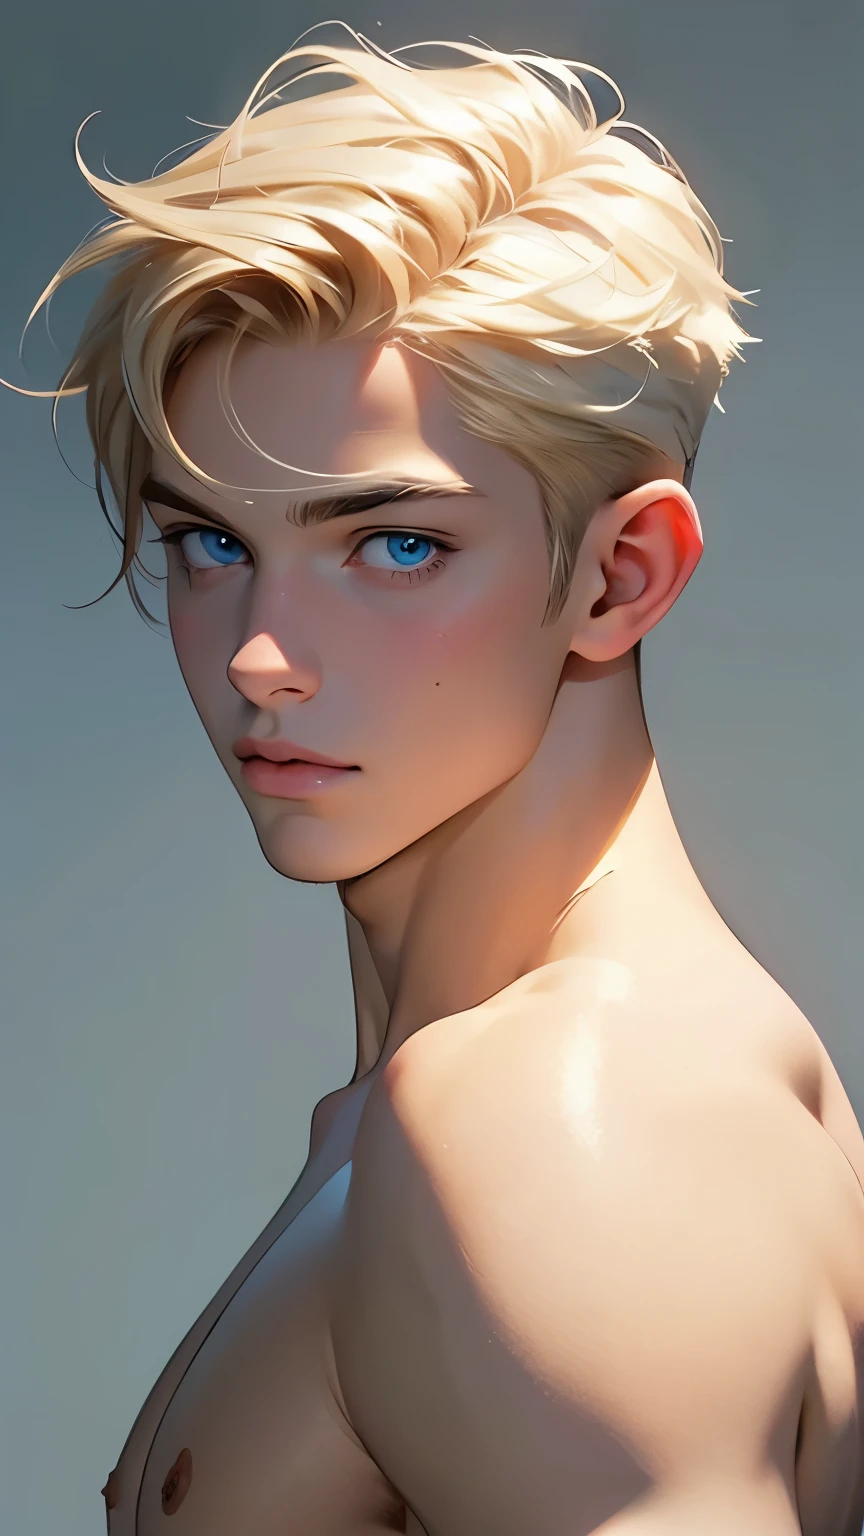 Caucasian man,  thin nose, thin lips, blue eyes, blonde hair, jock putfit, slightly fleshy undertone, young handsome face, pastel art 